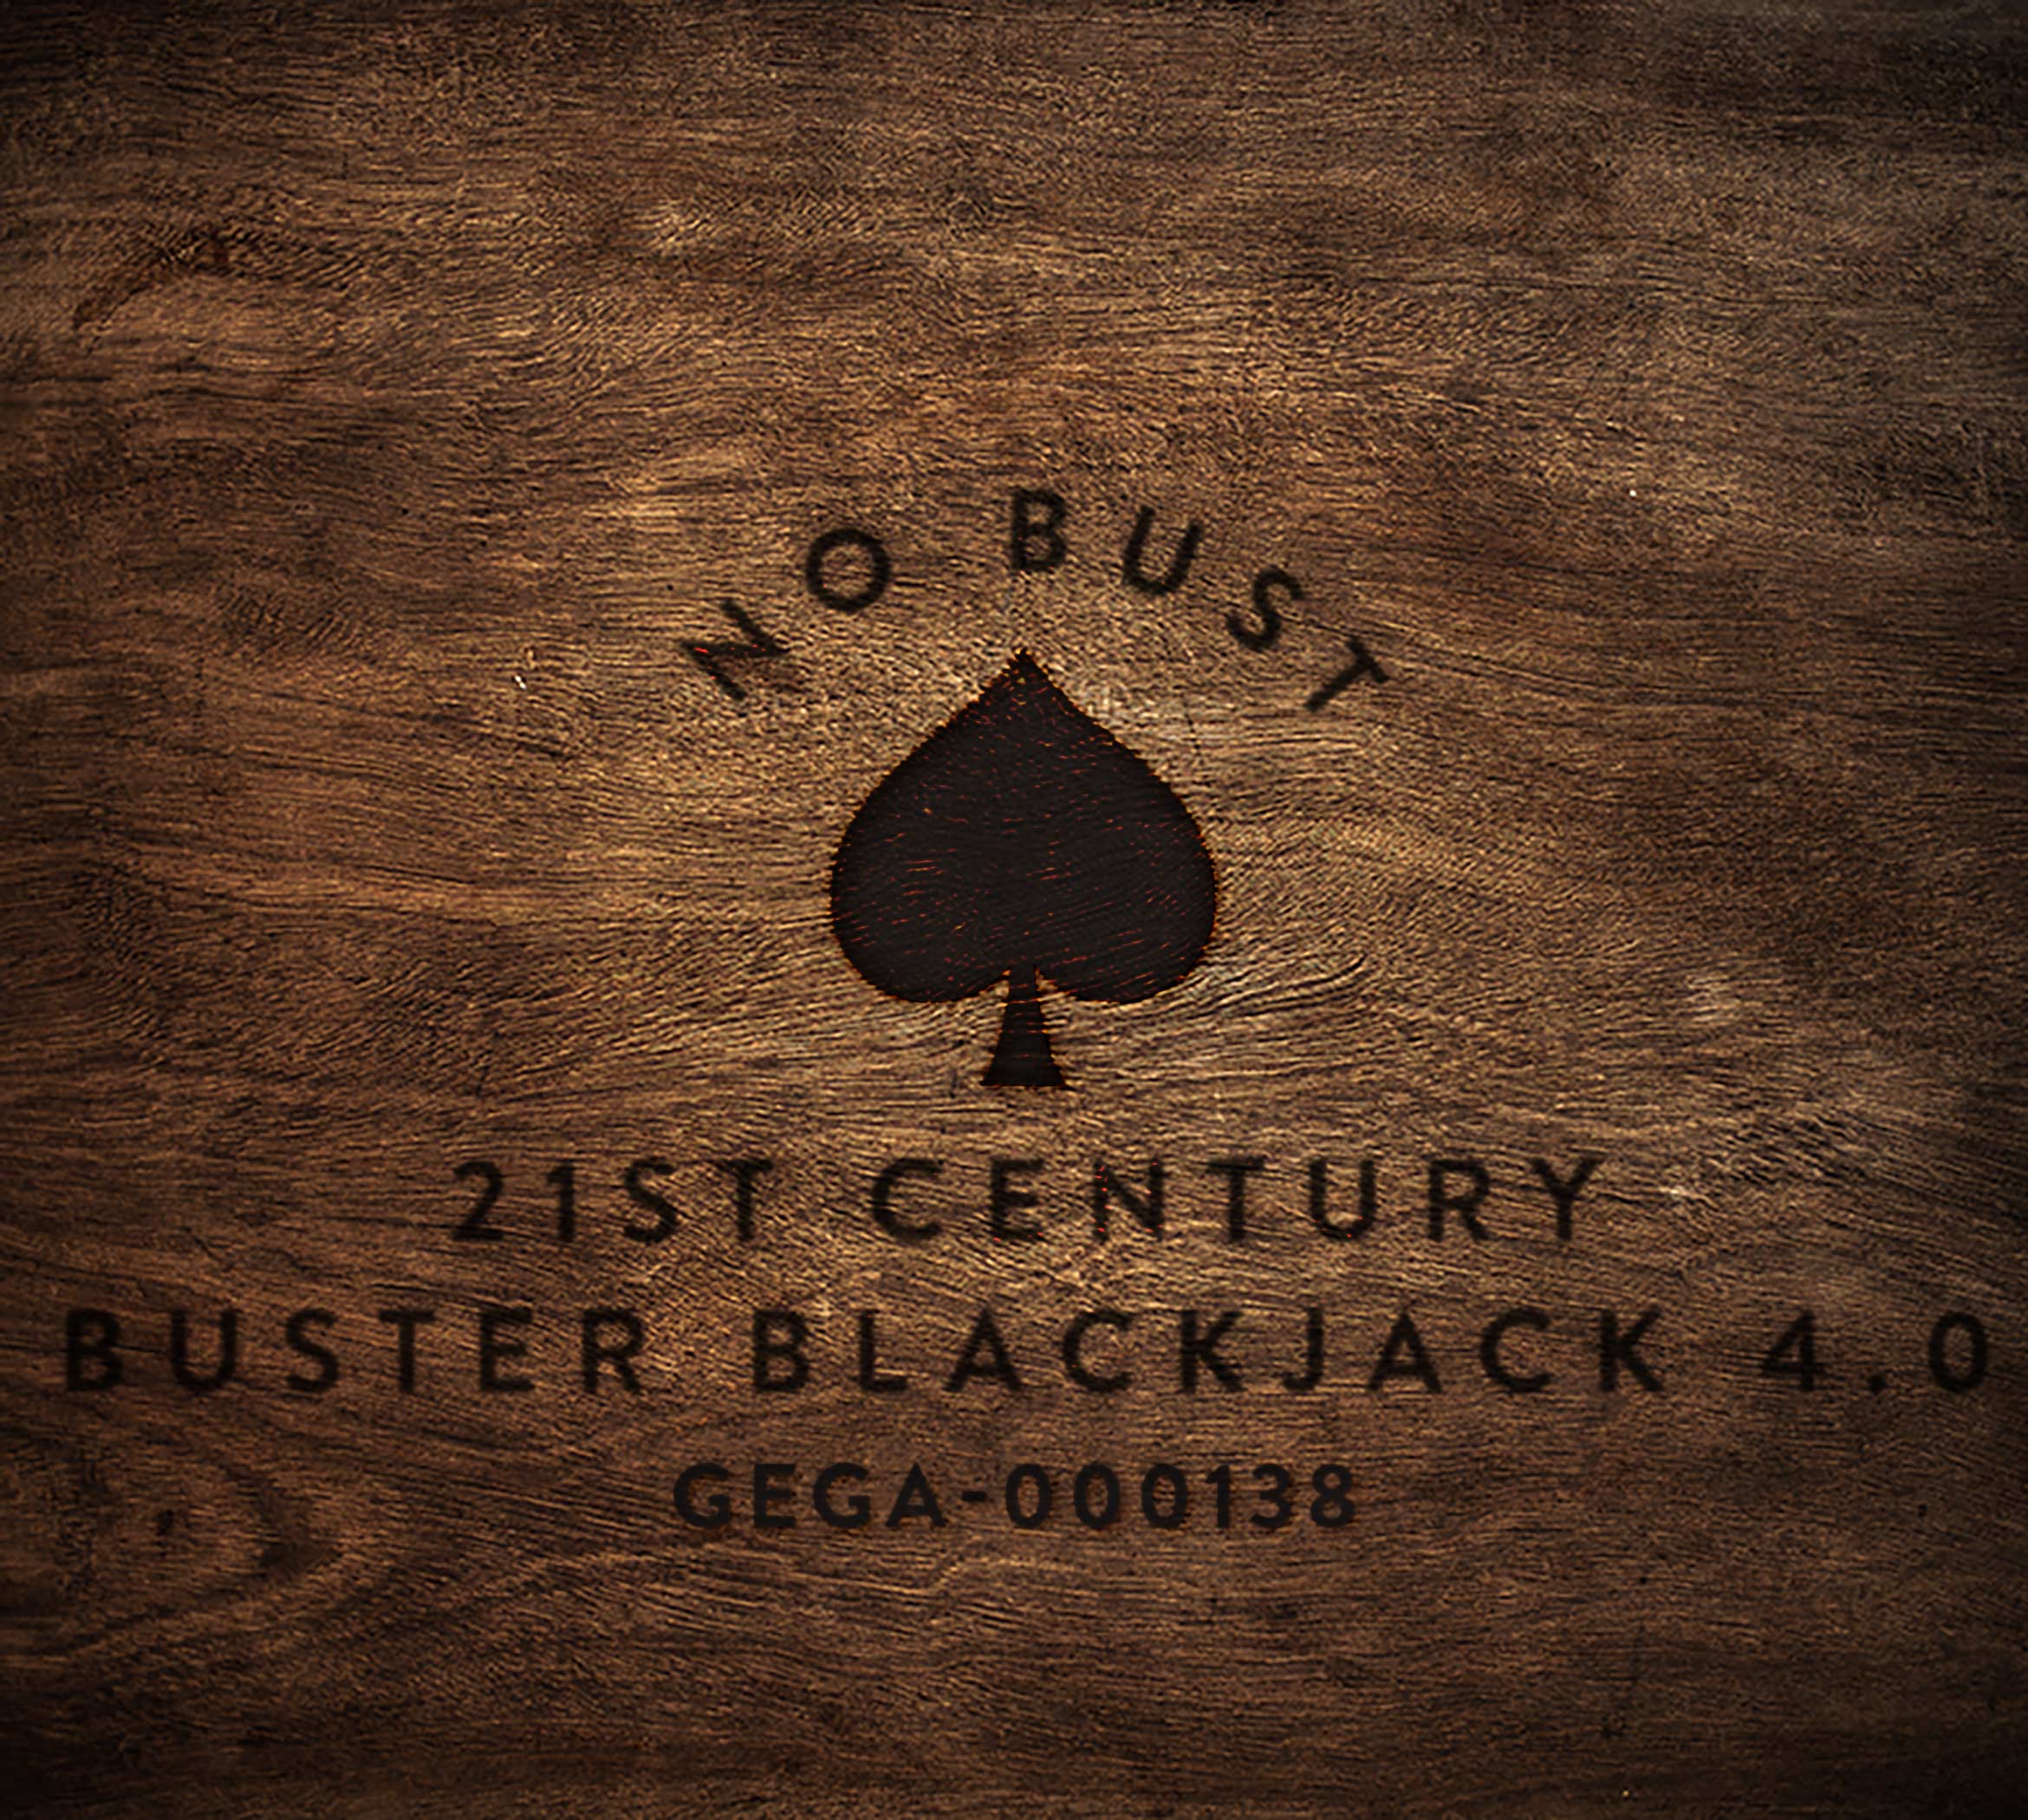 No Bust 21st Century Buster Blackjack 4.0 wood square